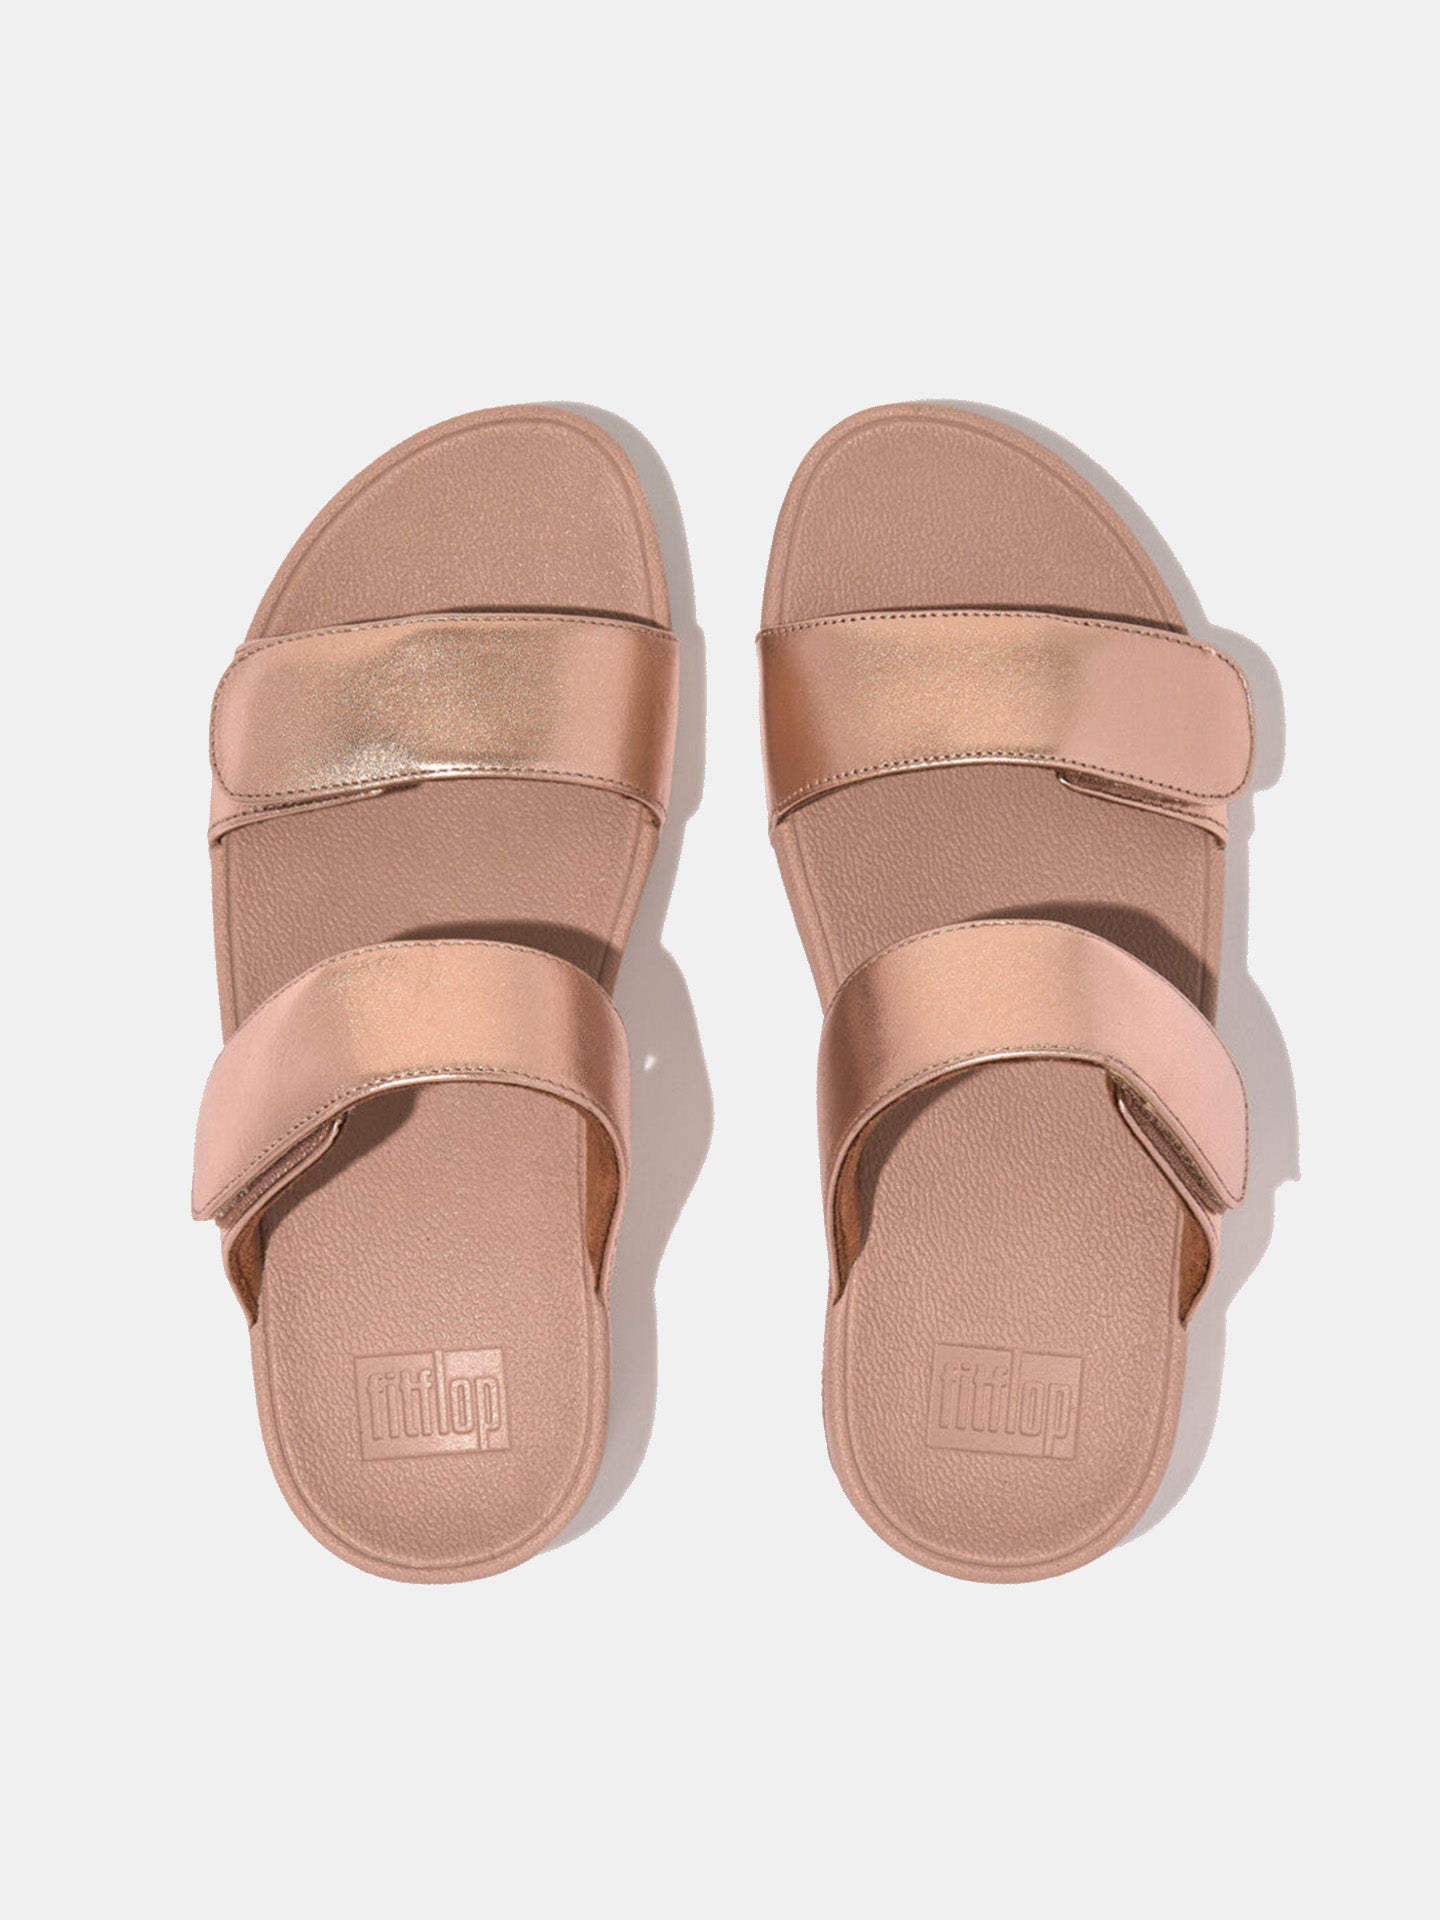 Fitflop Women's Lulu Adjustable Leather Slides #color_Pink